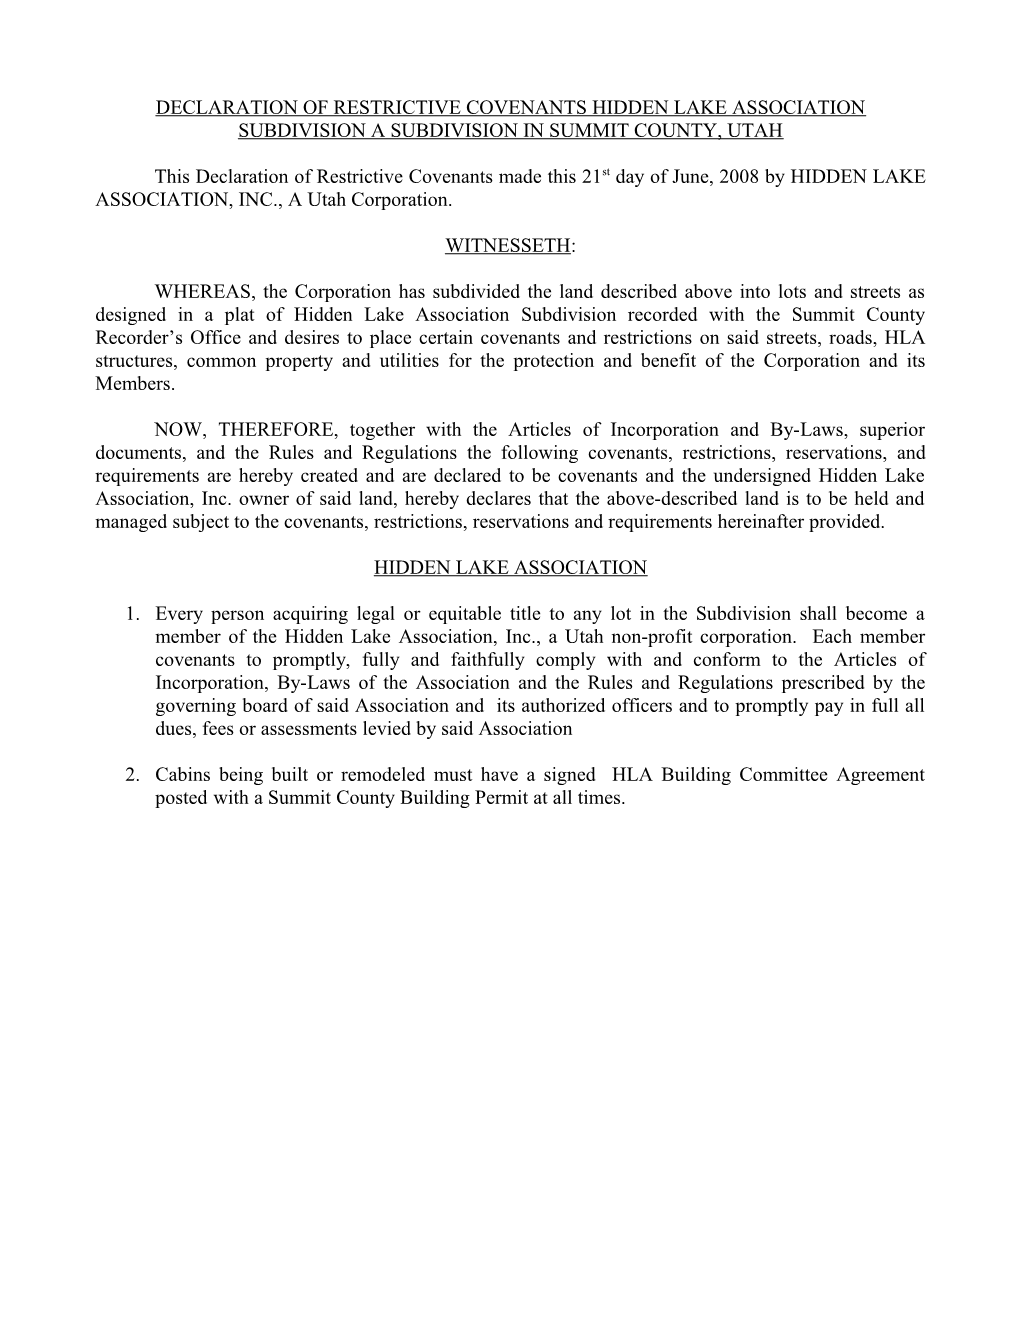 Declaration of Restrictive Covenants Hidden Lake Association Subdivision a Subdivision